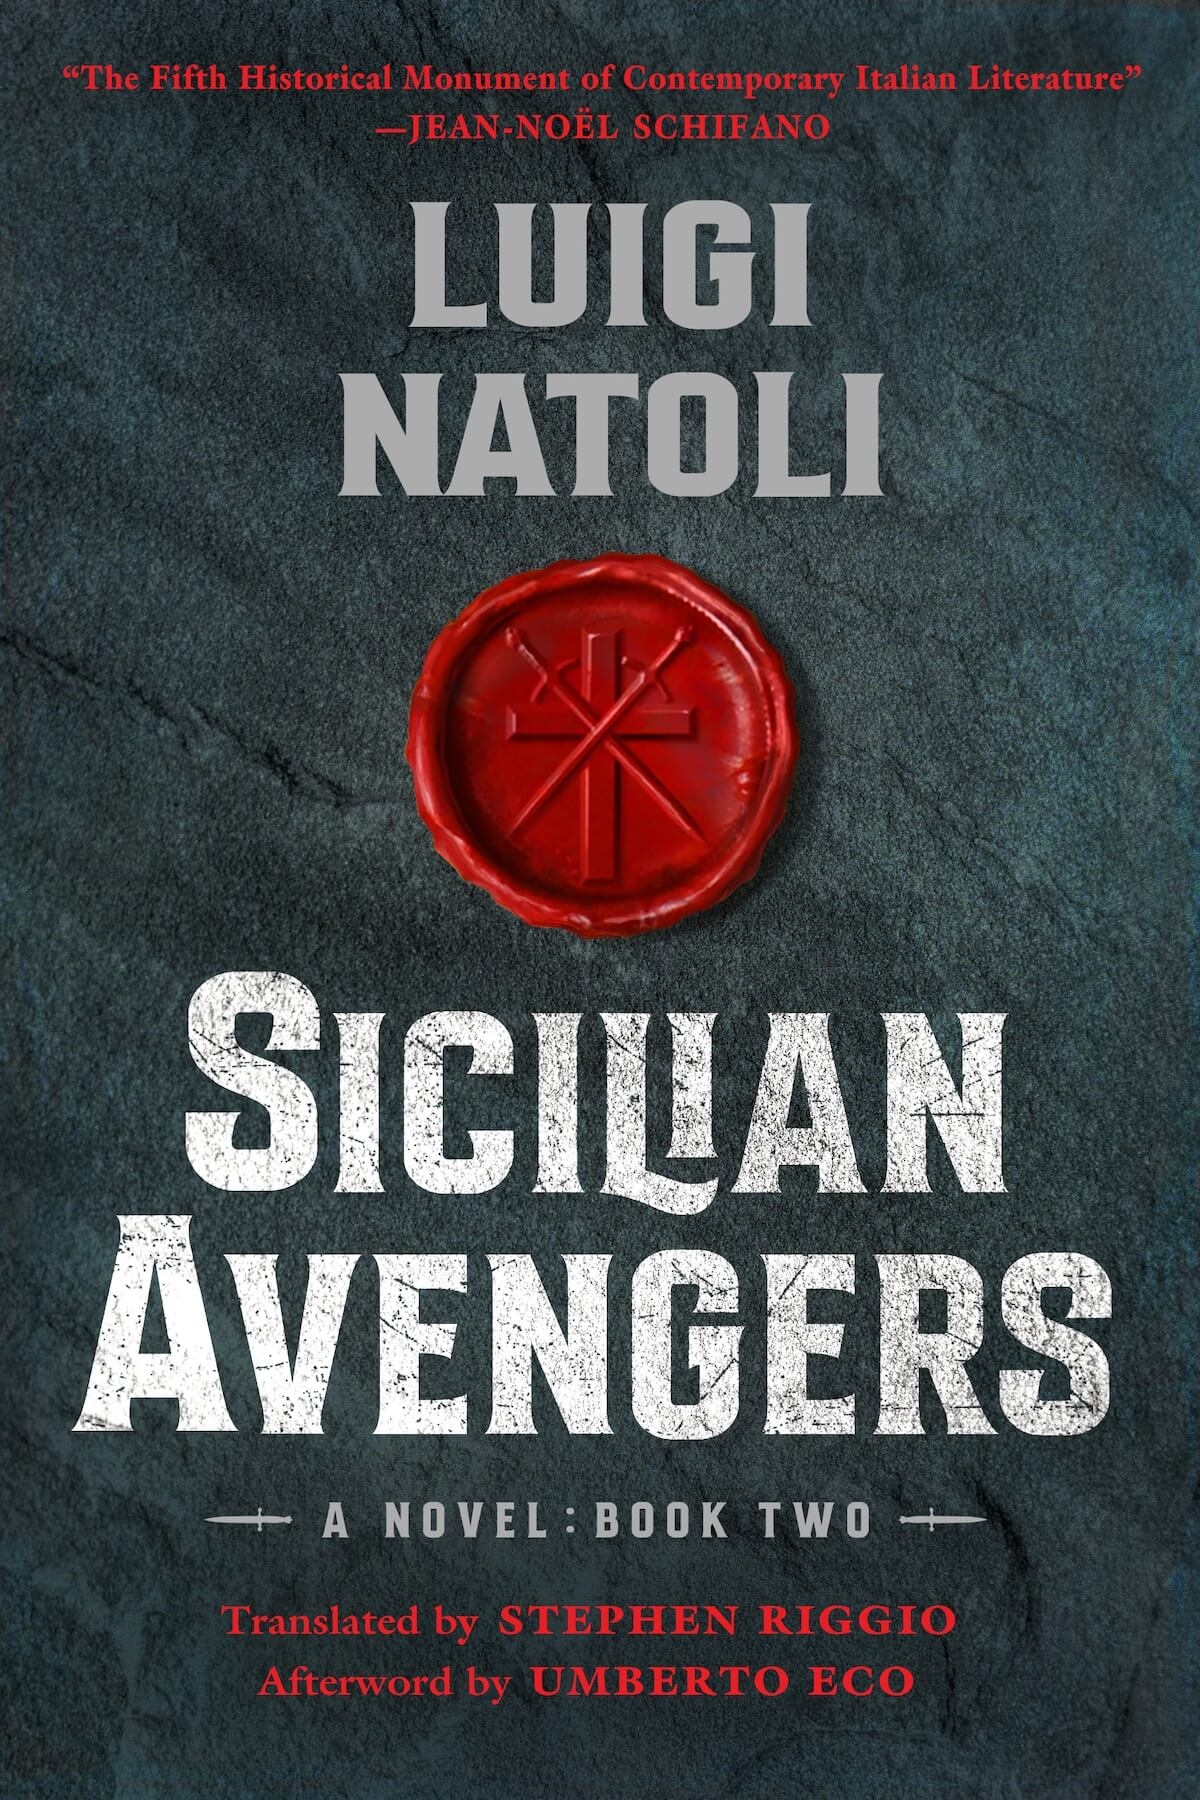 sicilian avengers book 2 (1) (1)